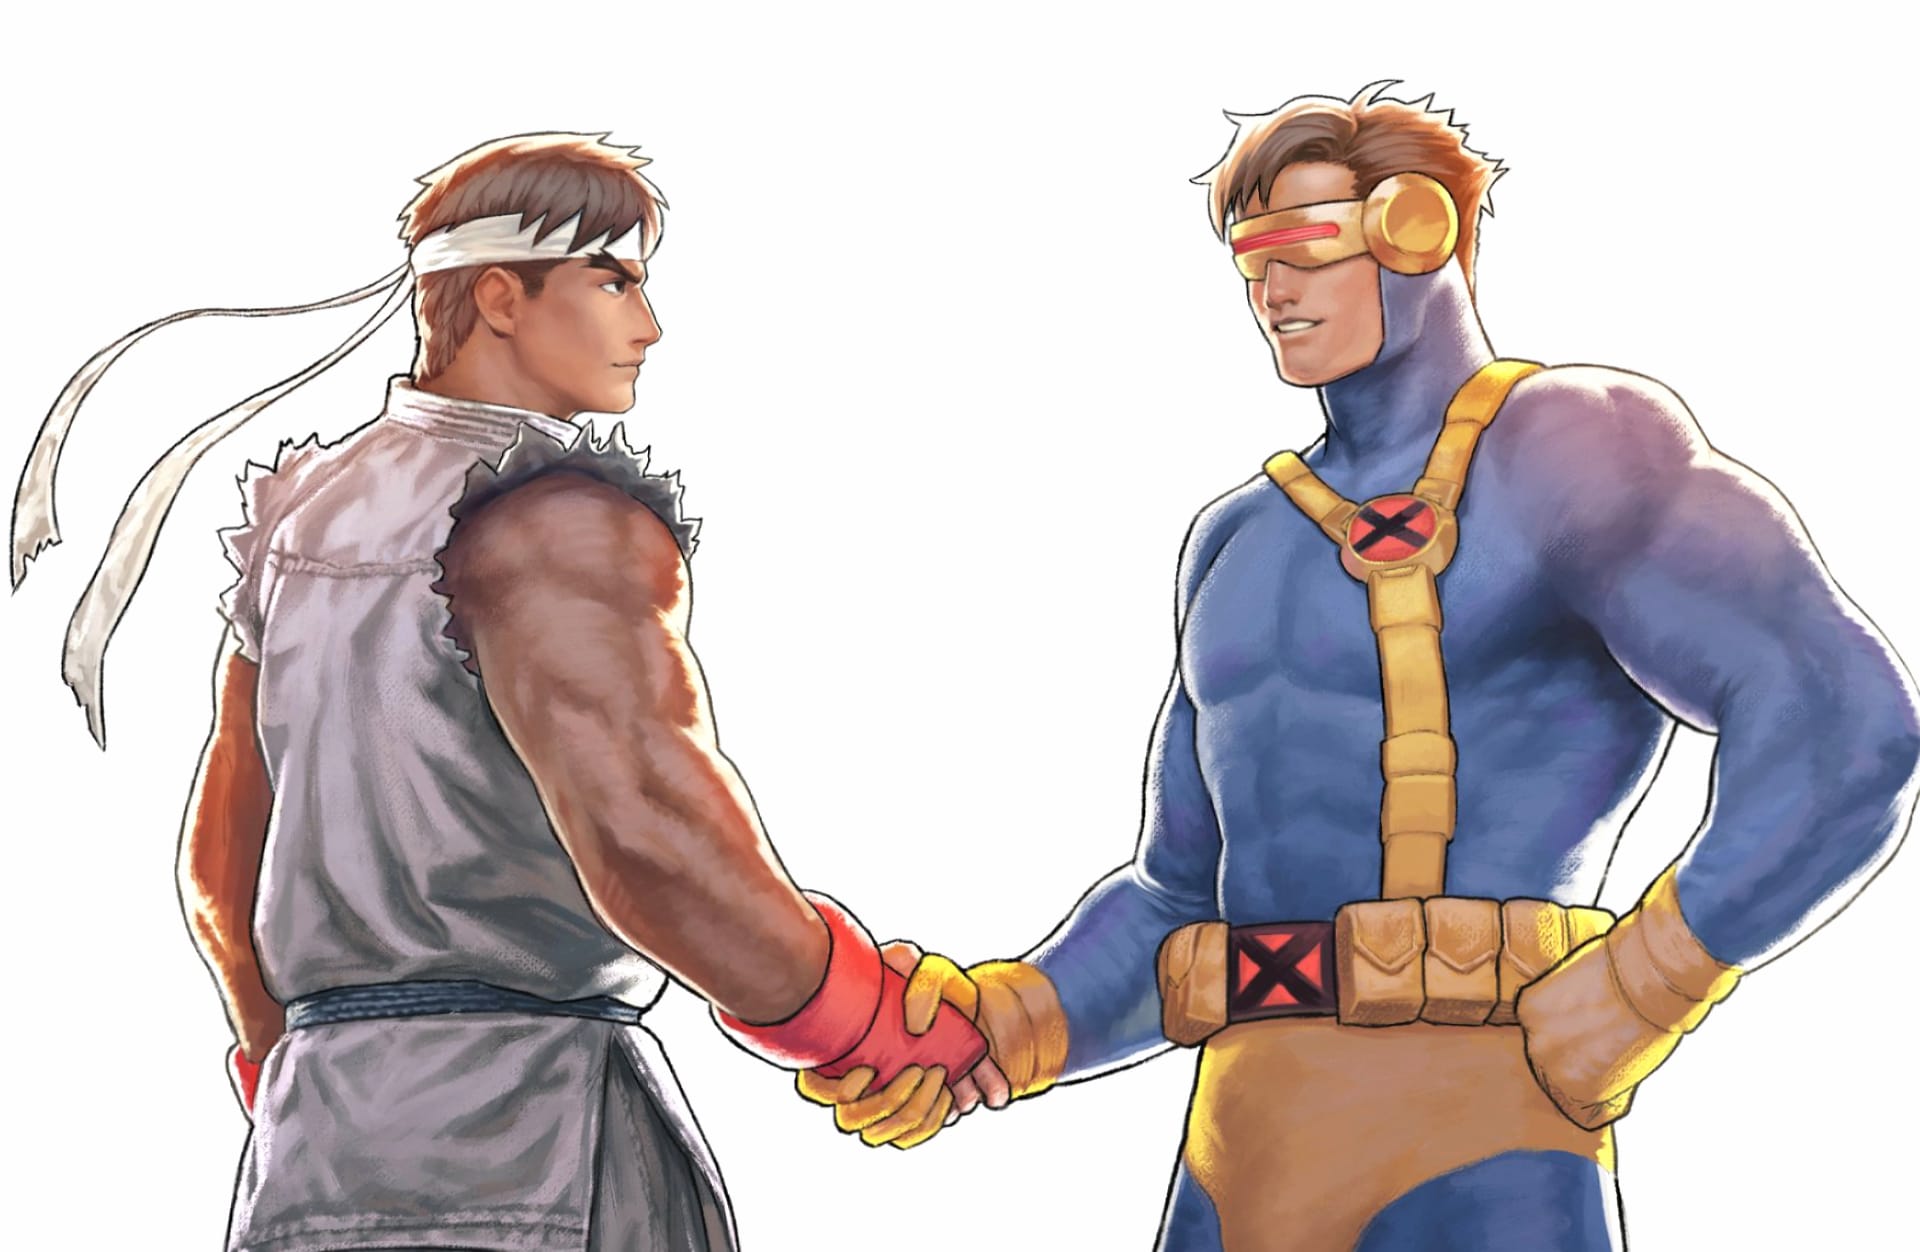 X-Men vs. Street Fighter wallpapers HD quality